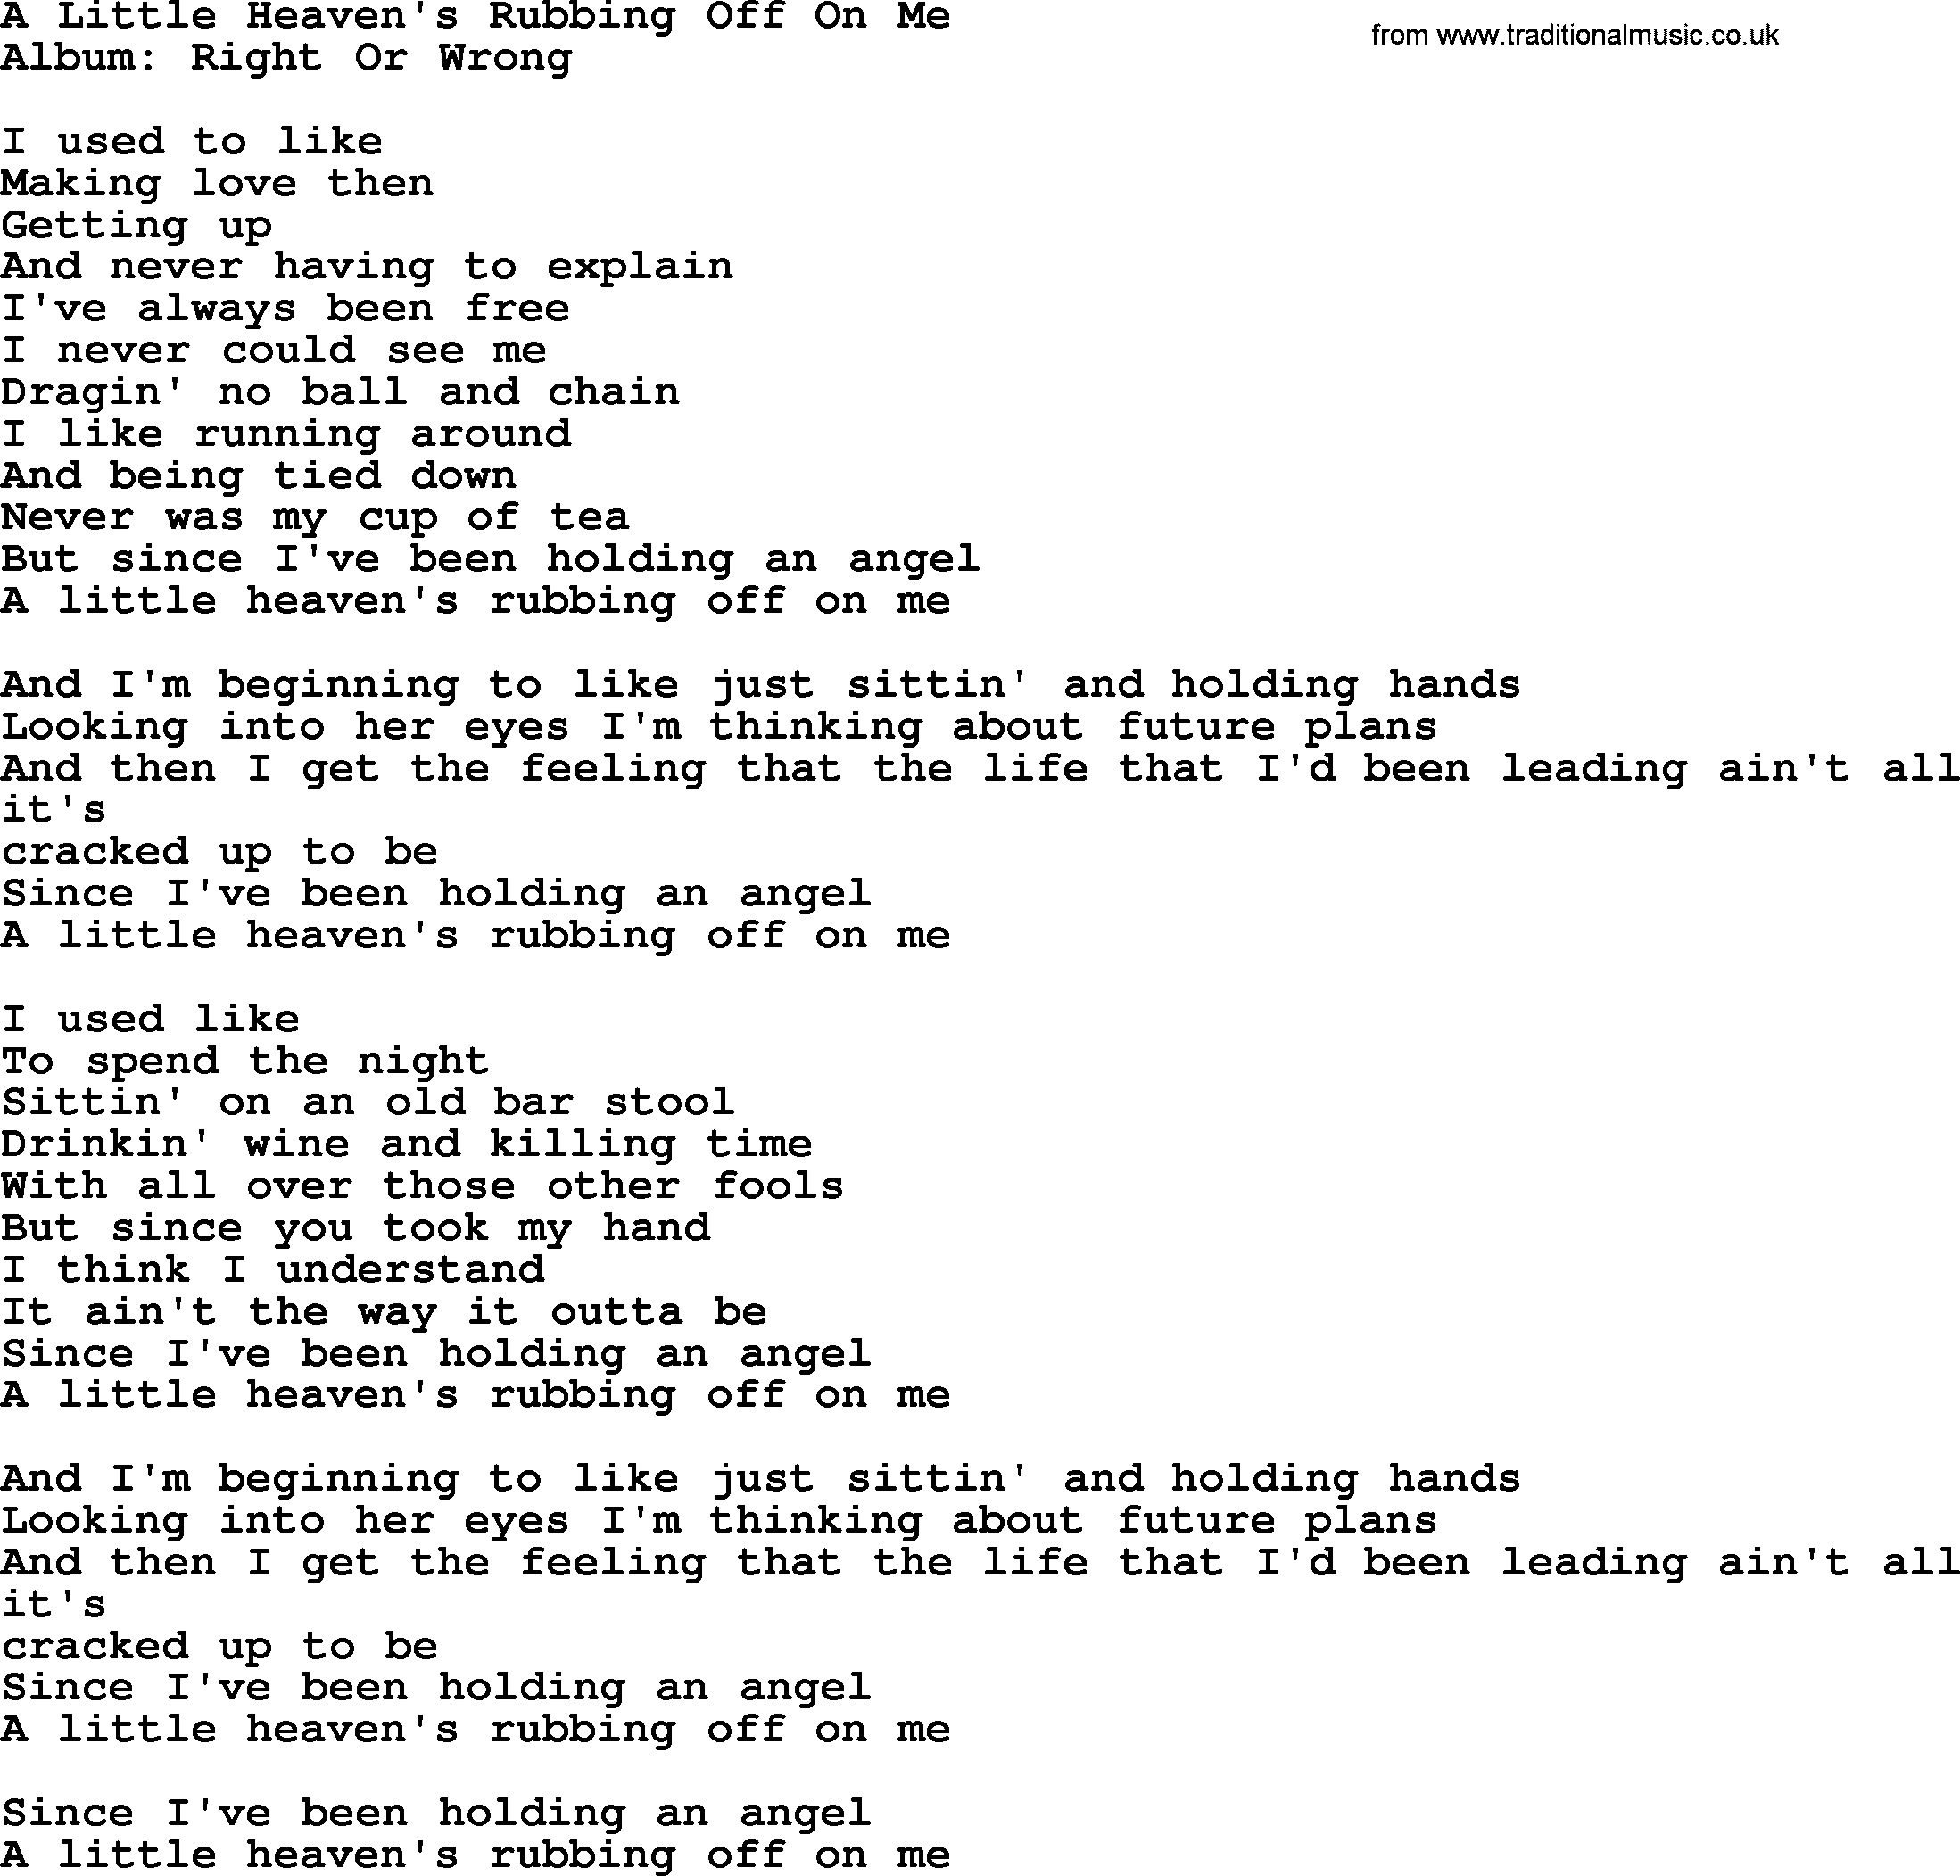 George Strait song: A Little Heaven's Rubbing Off On Me, lyrics